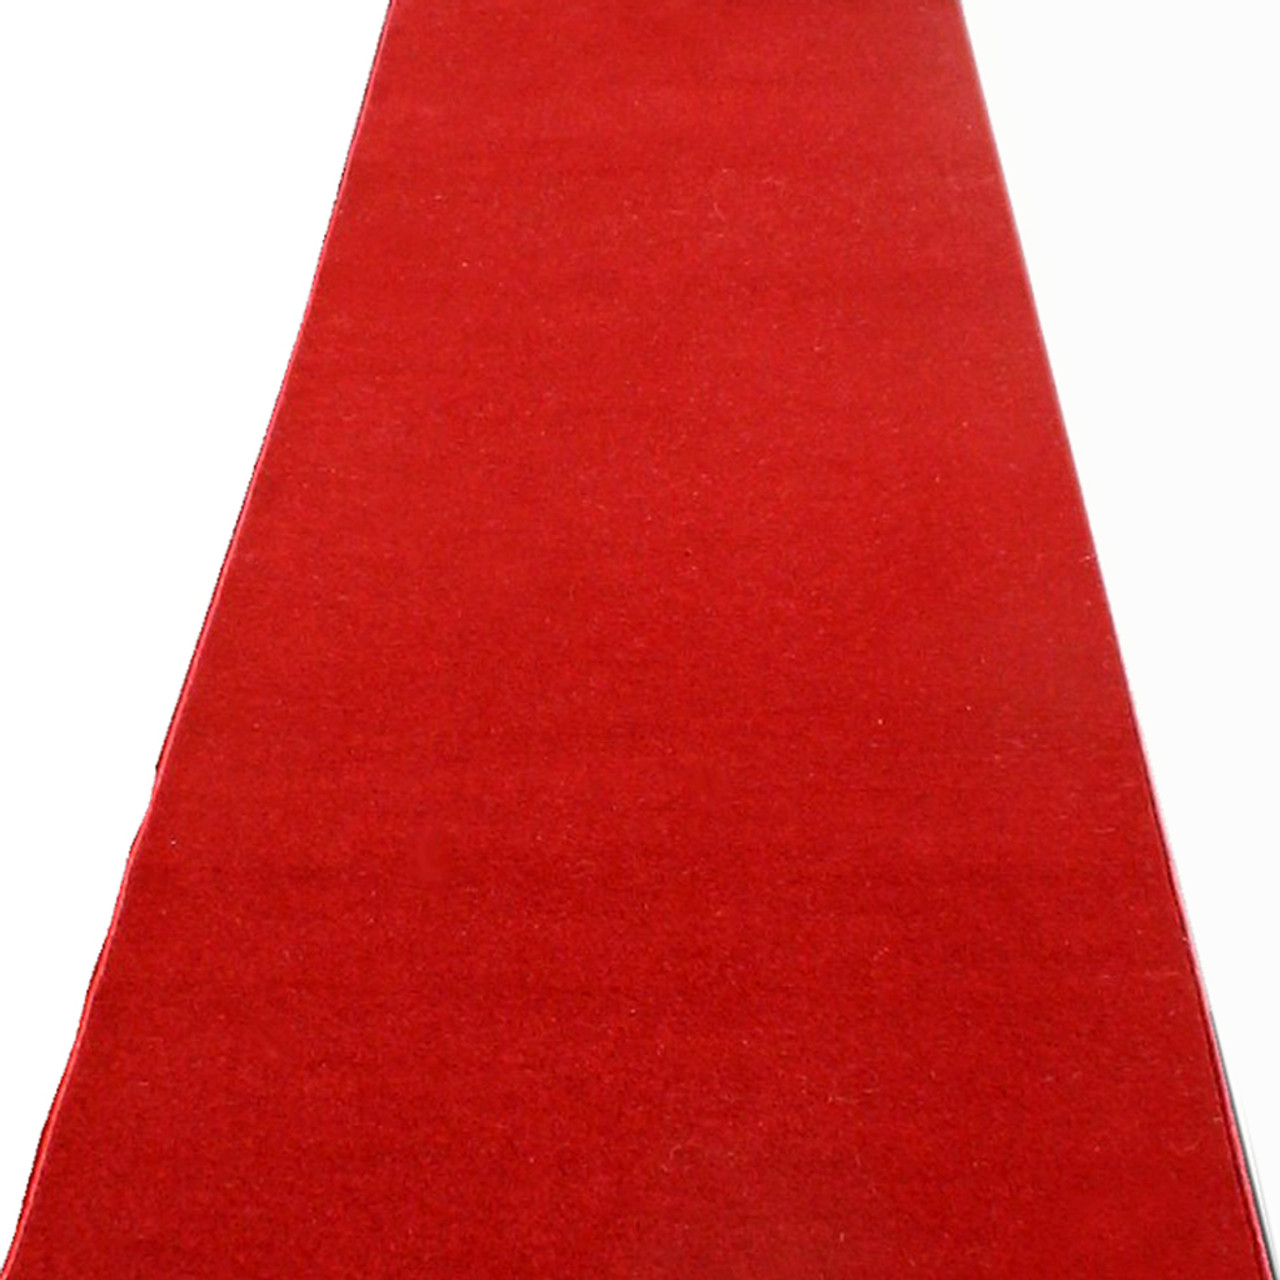 Red Carpet ��� 1.2m x 6m